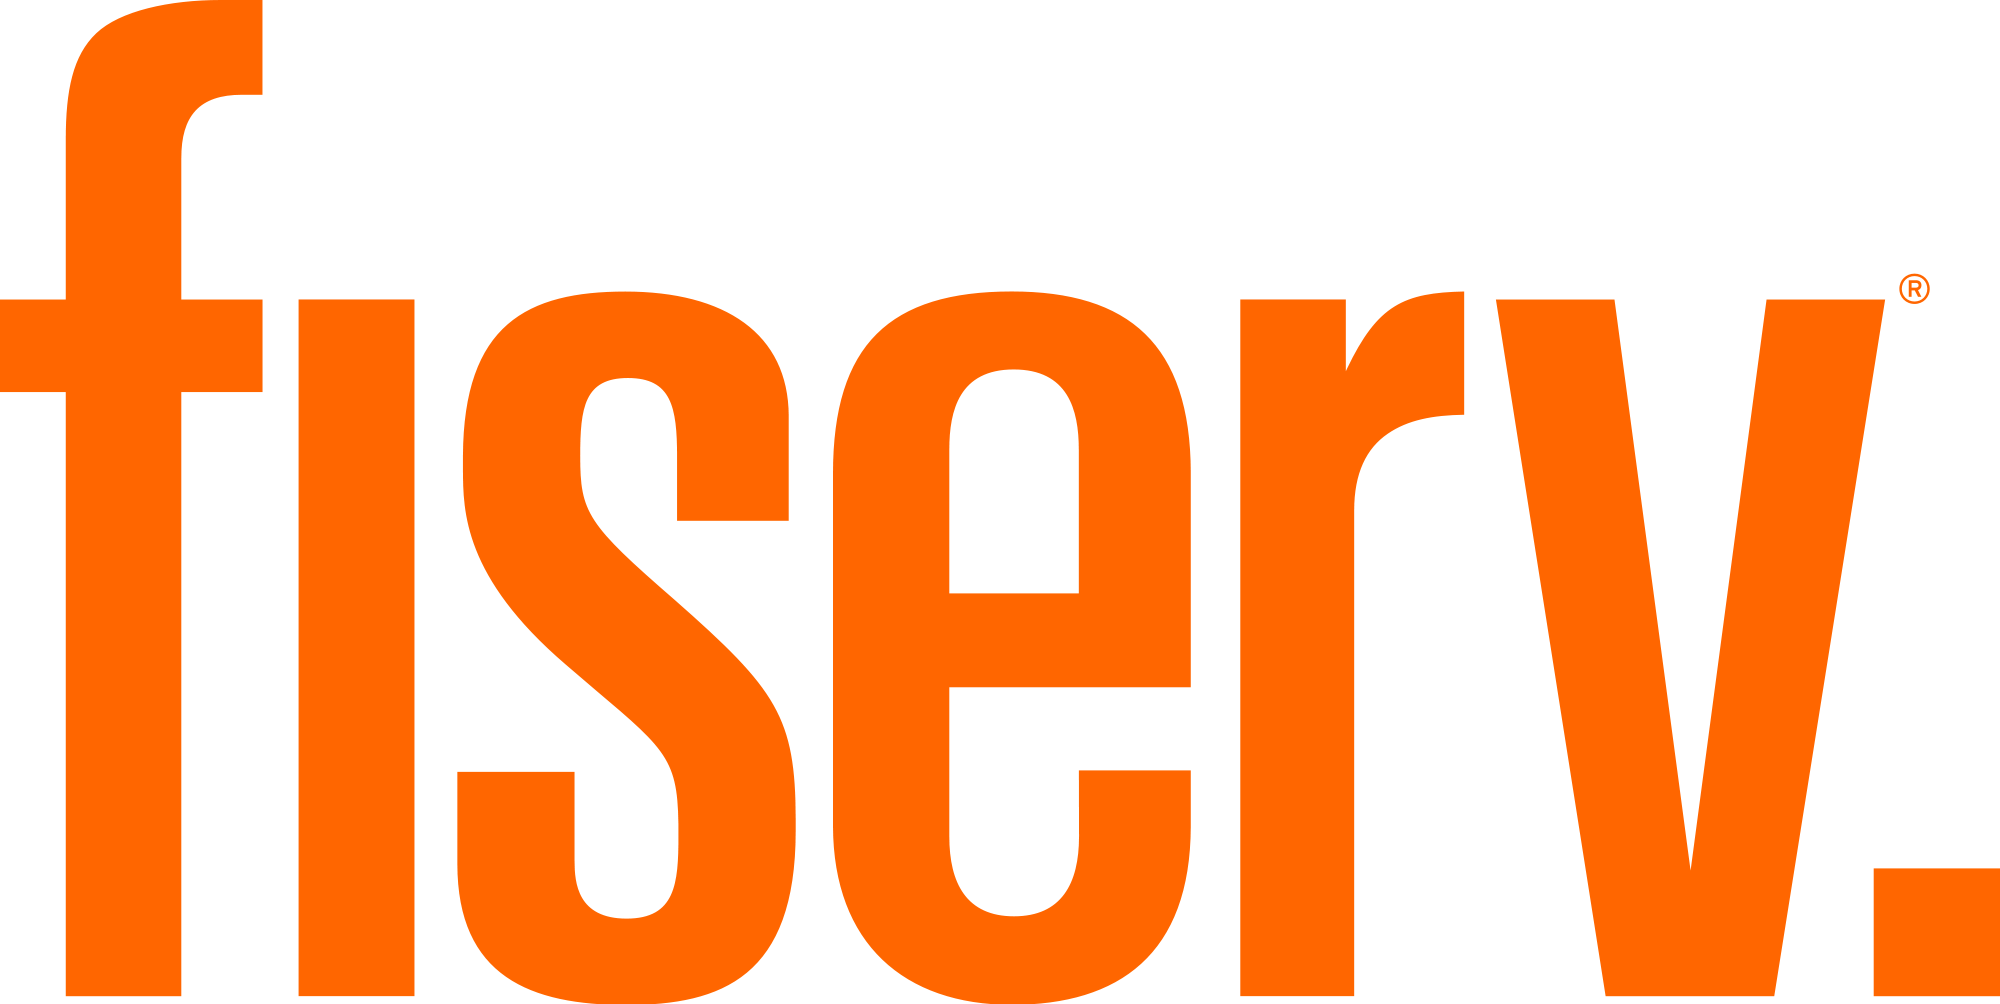 Fiserv Brand Logo